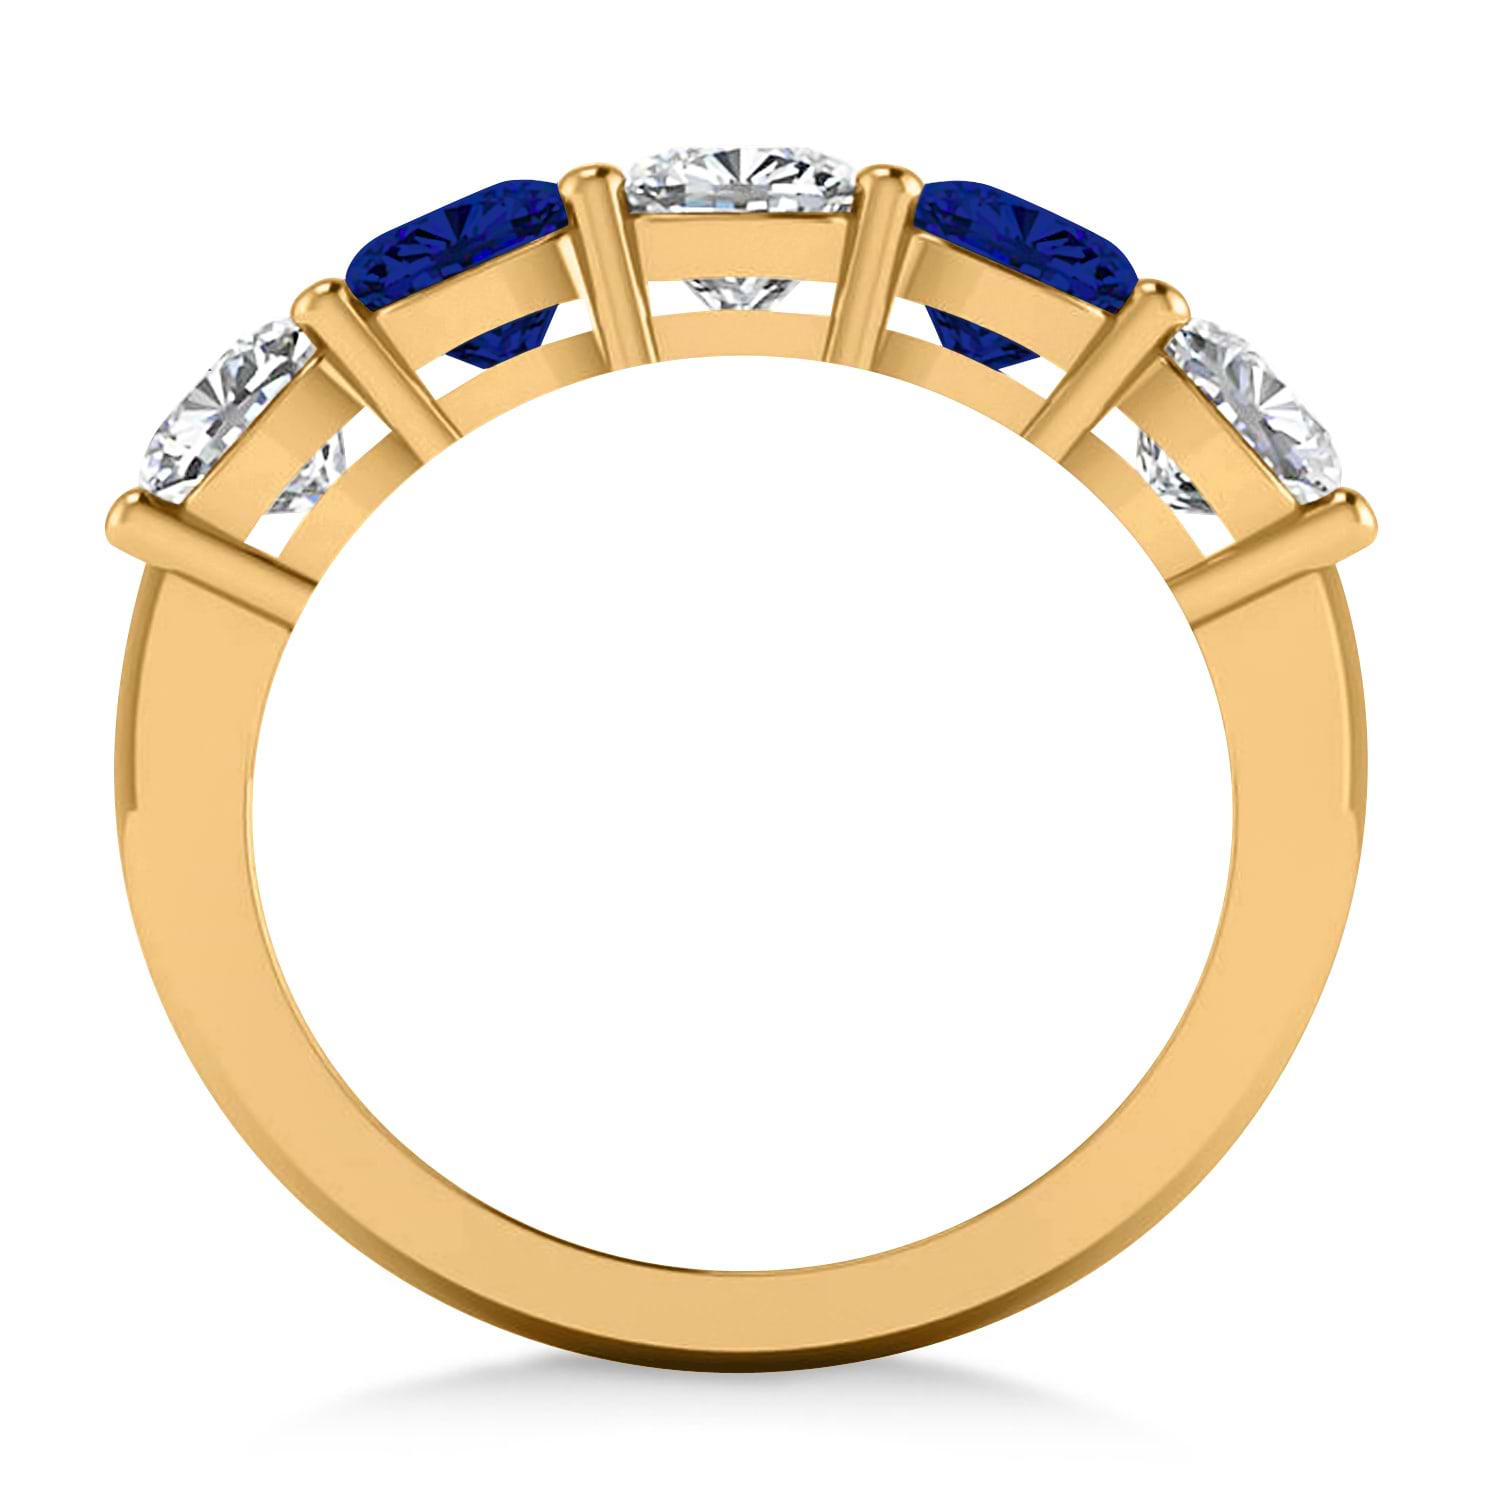 Cushion Diamond & Blue Sapphire Five Stone Ring 14k Yellow Gold (2.70ct)